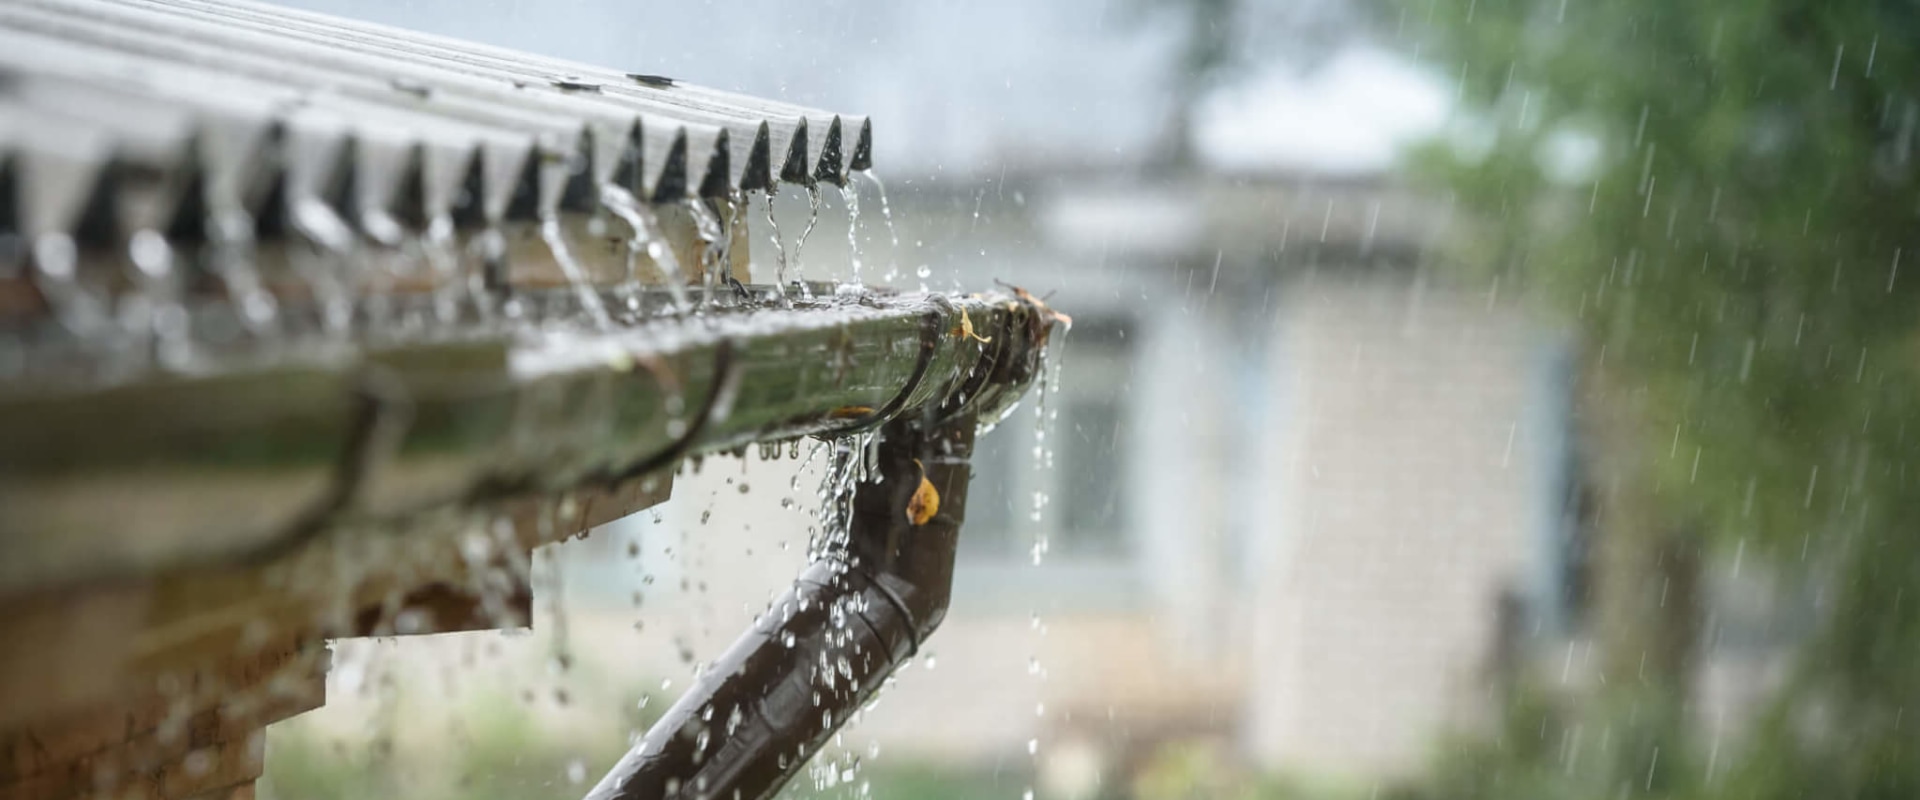 Can gutter guards handle heavy rain?